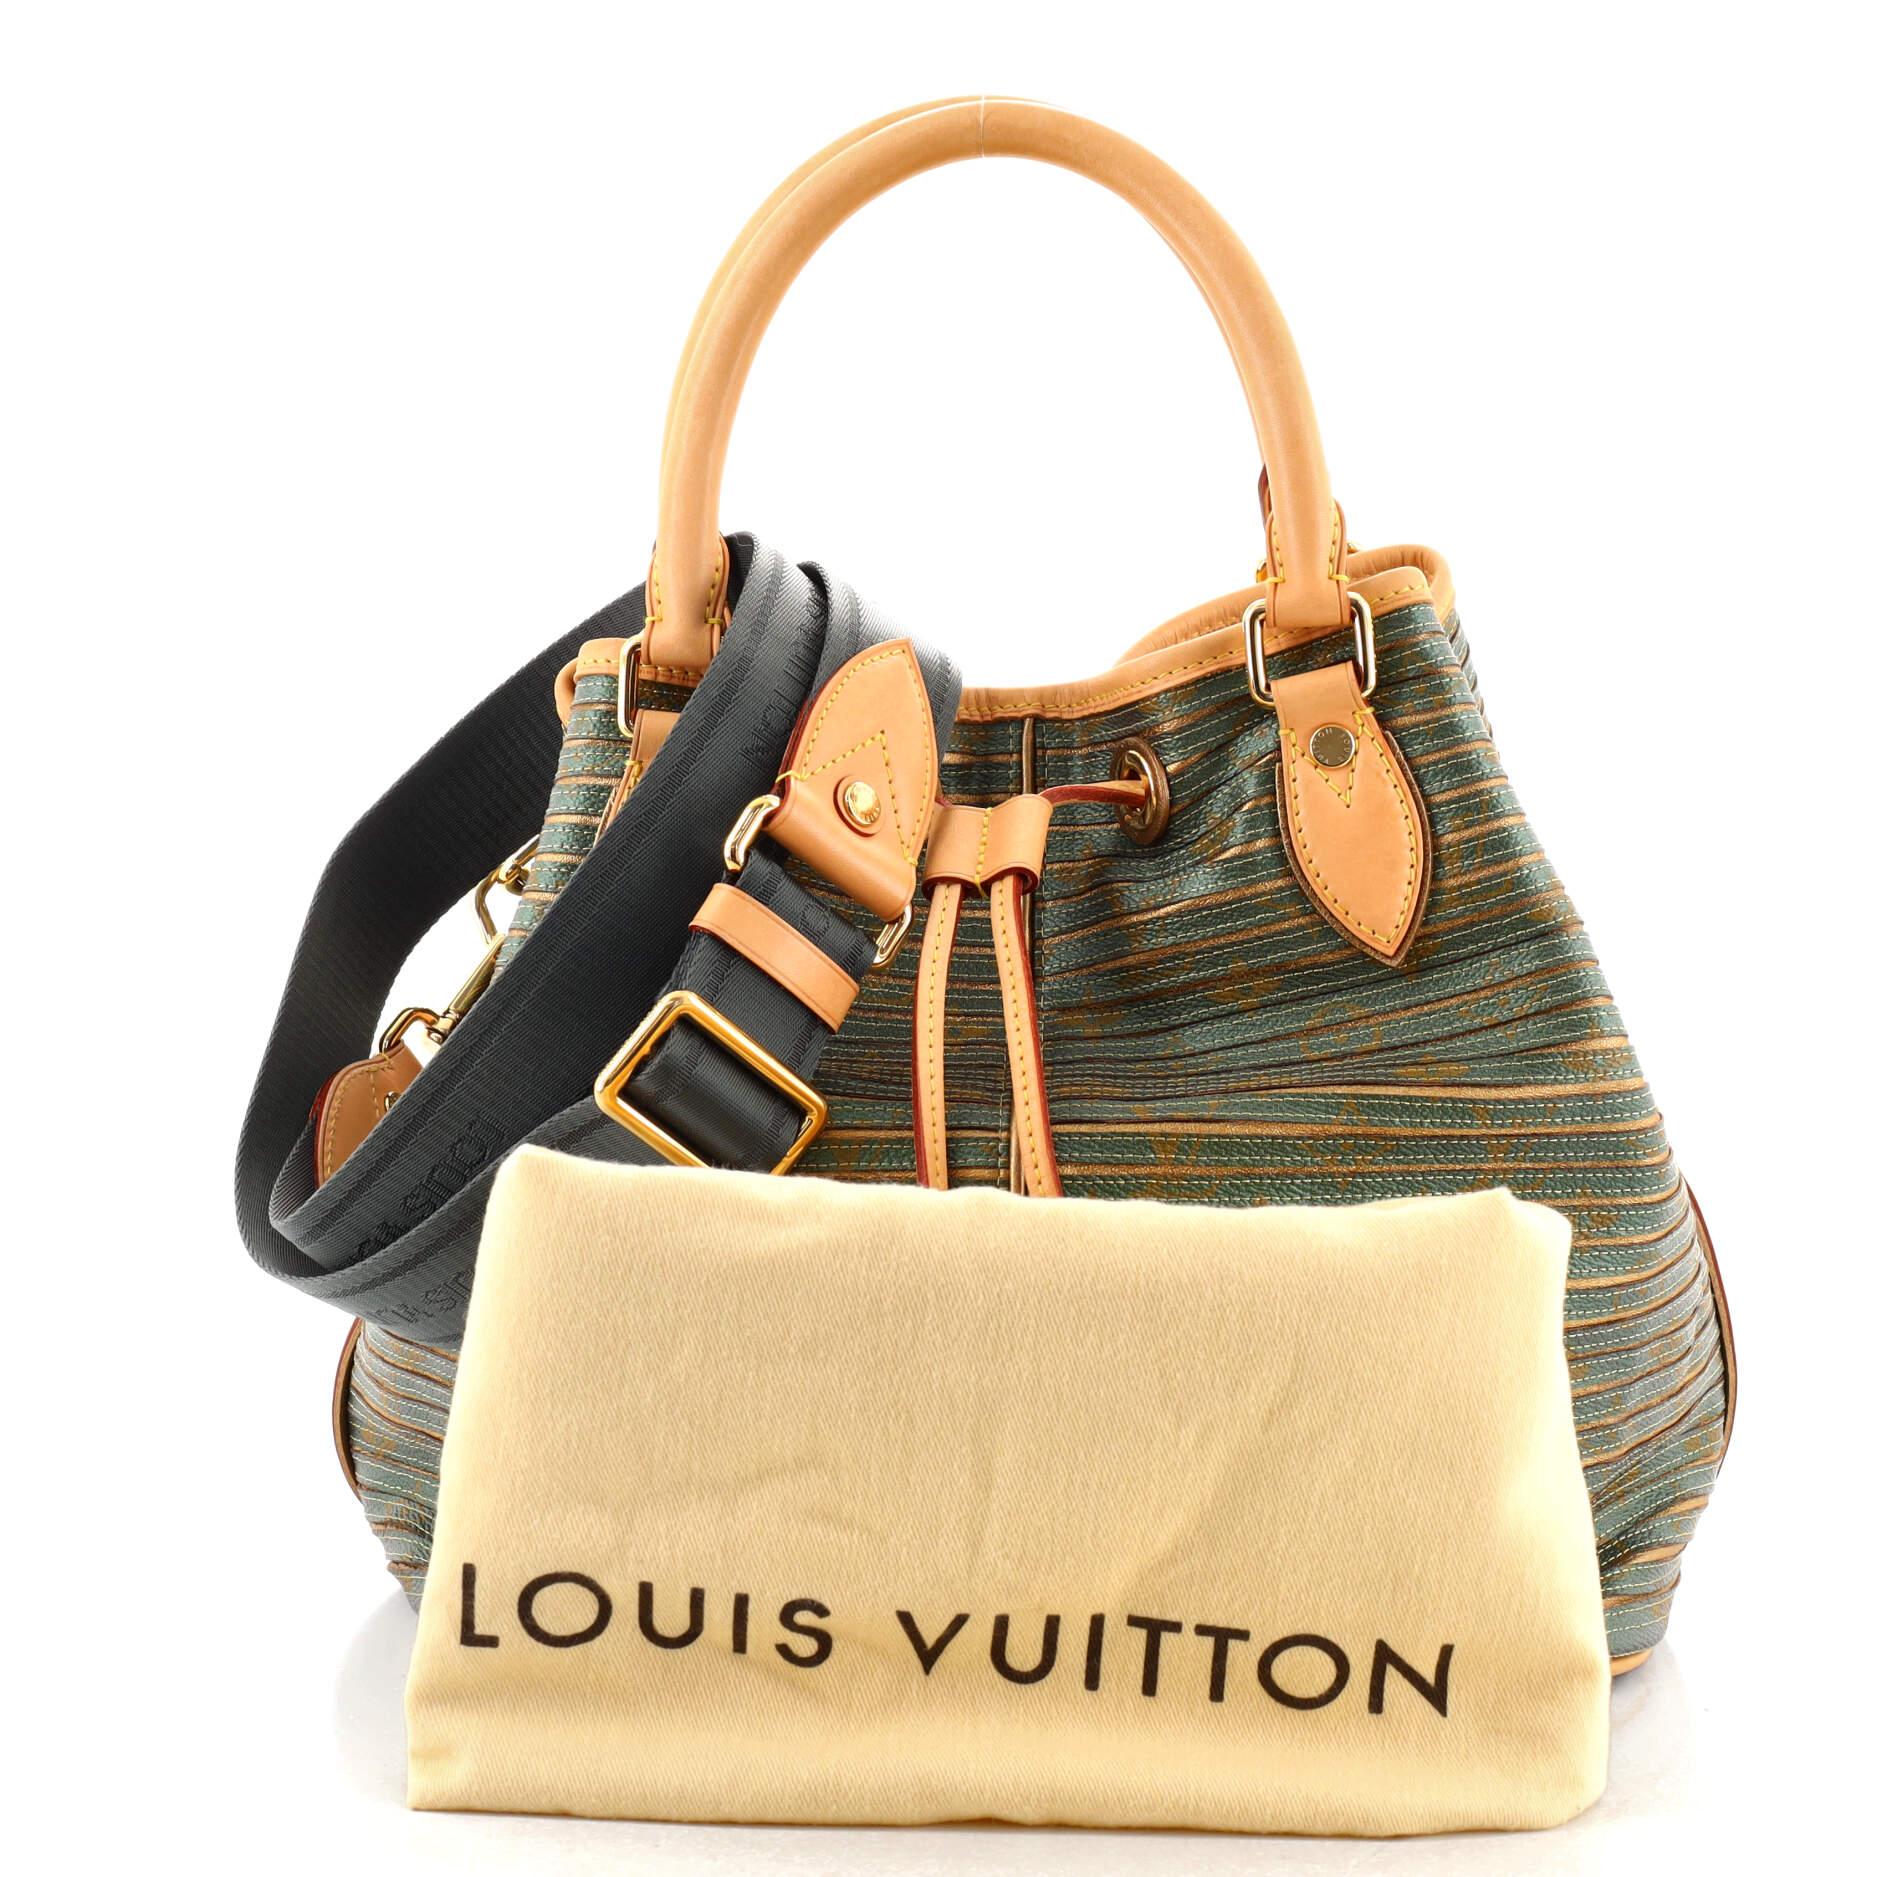 Louis Vuitton Eden Neo - For Sale on 1stDibs